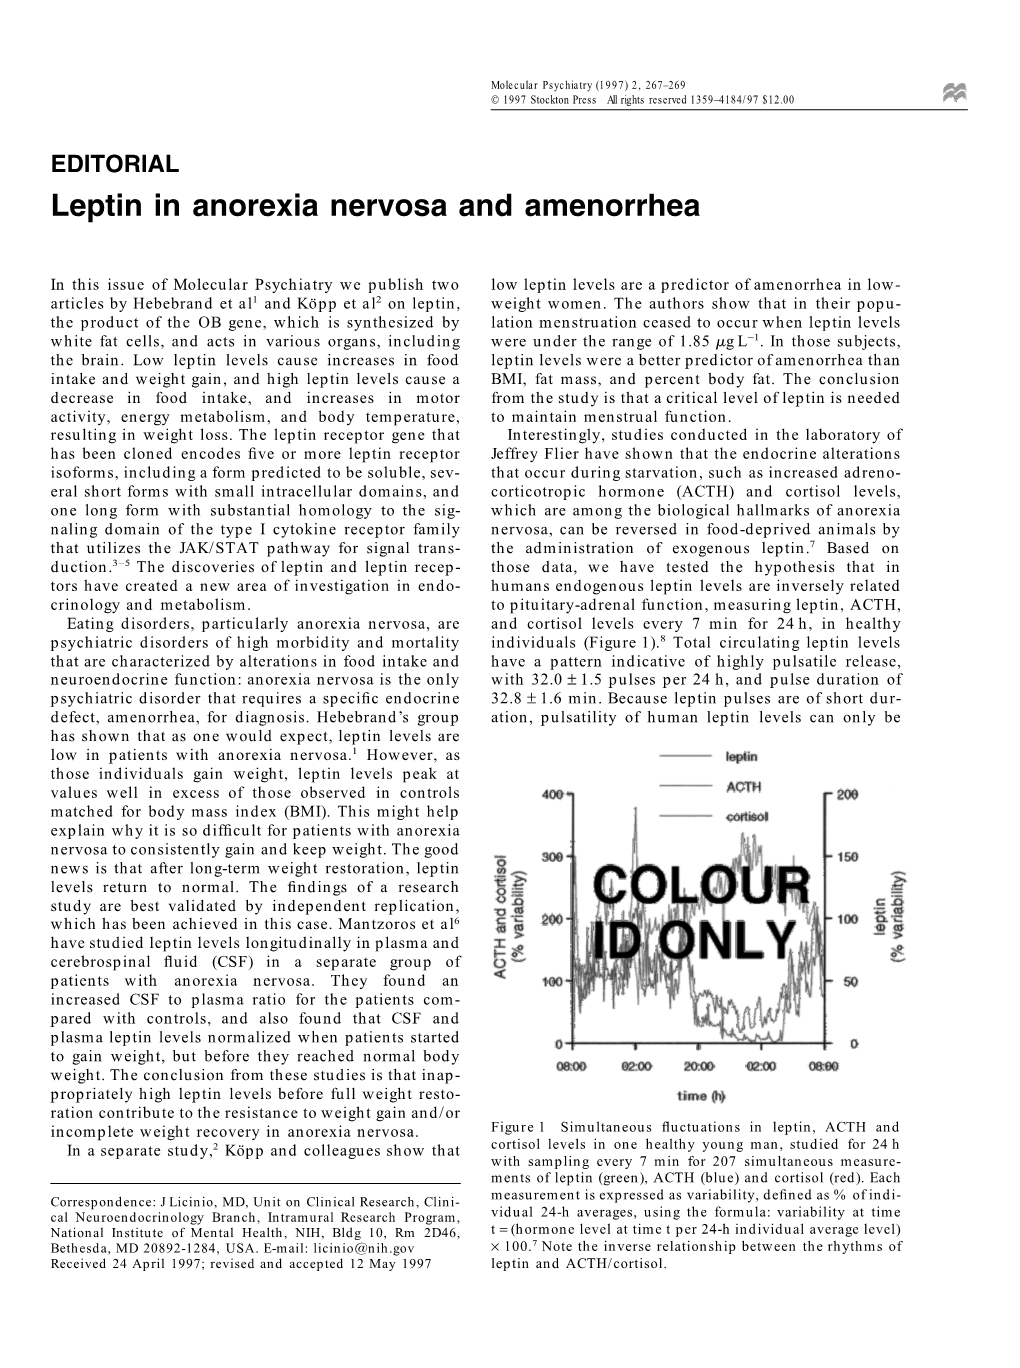 Leptin in Anorexia Nervosa and Amenorrhea